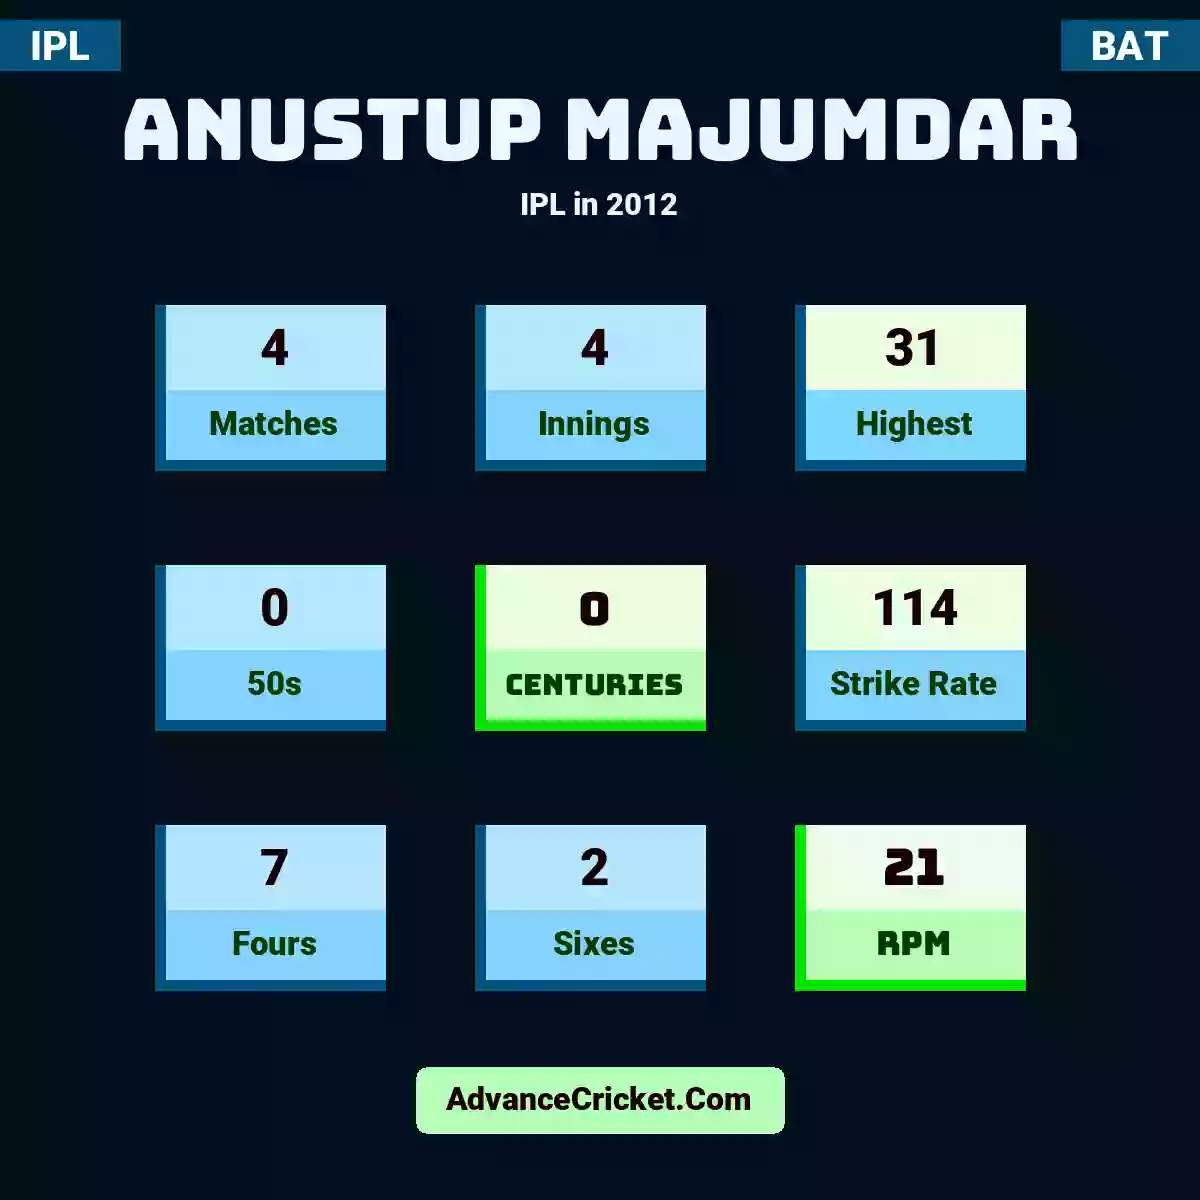 Anustup Majumdar IPL  in 2012, Anustup Majumdar played 4 matches, scored 31 runs as highest, 0 half-centuries, and 0 centuries, with a strike rate of 114. A.Majumdar hit 7 fours and 2 sixes, with an RPM of 21.